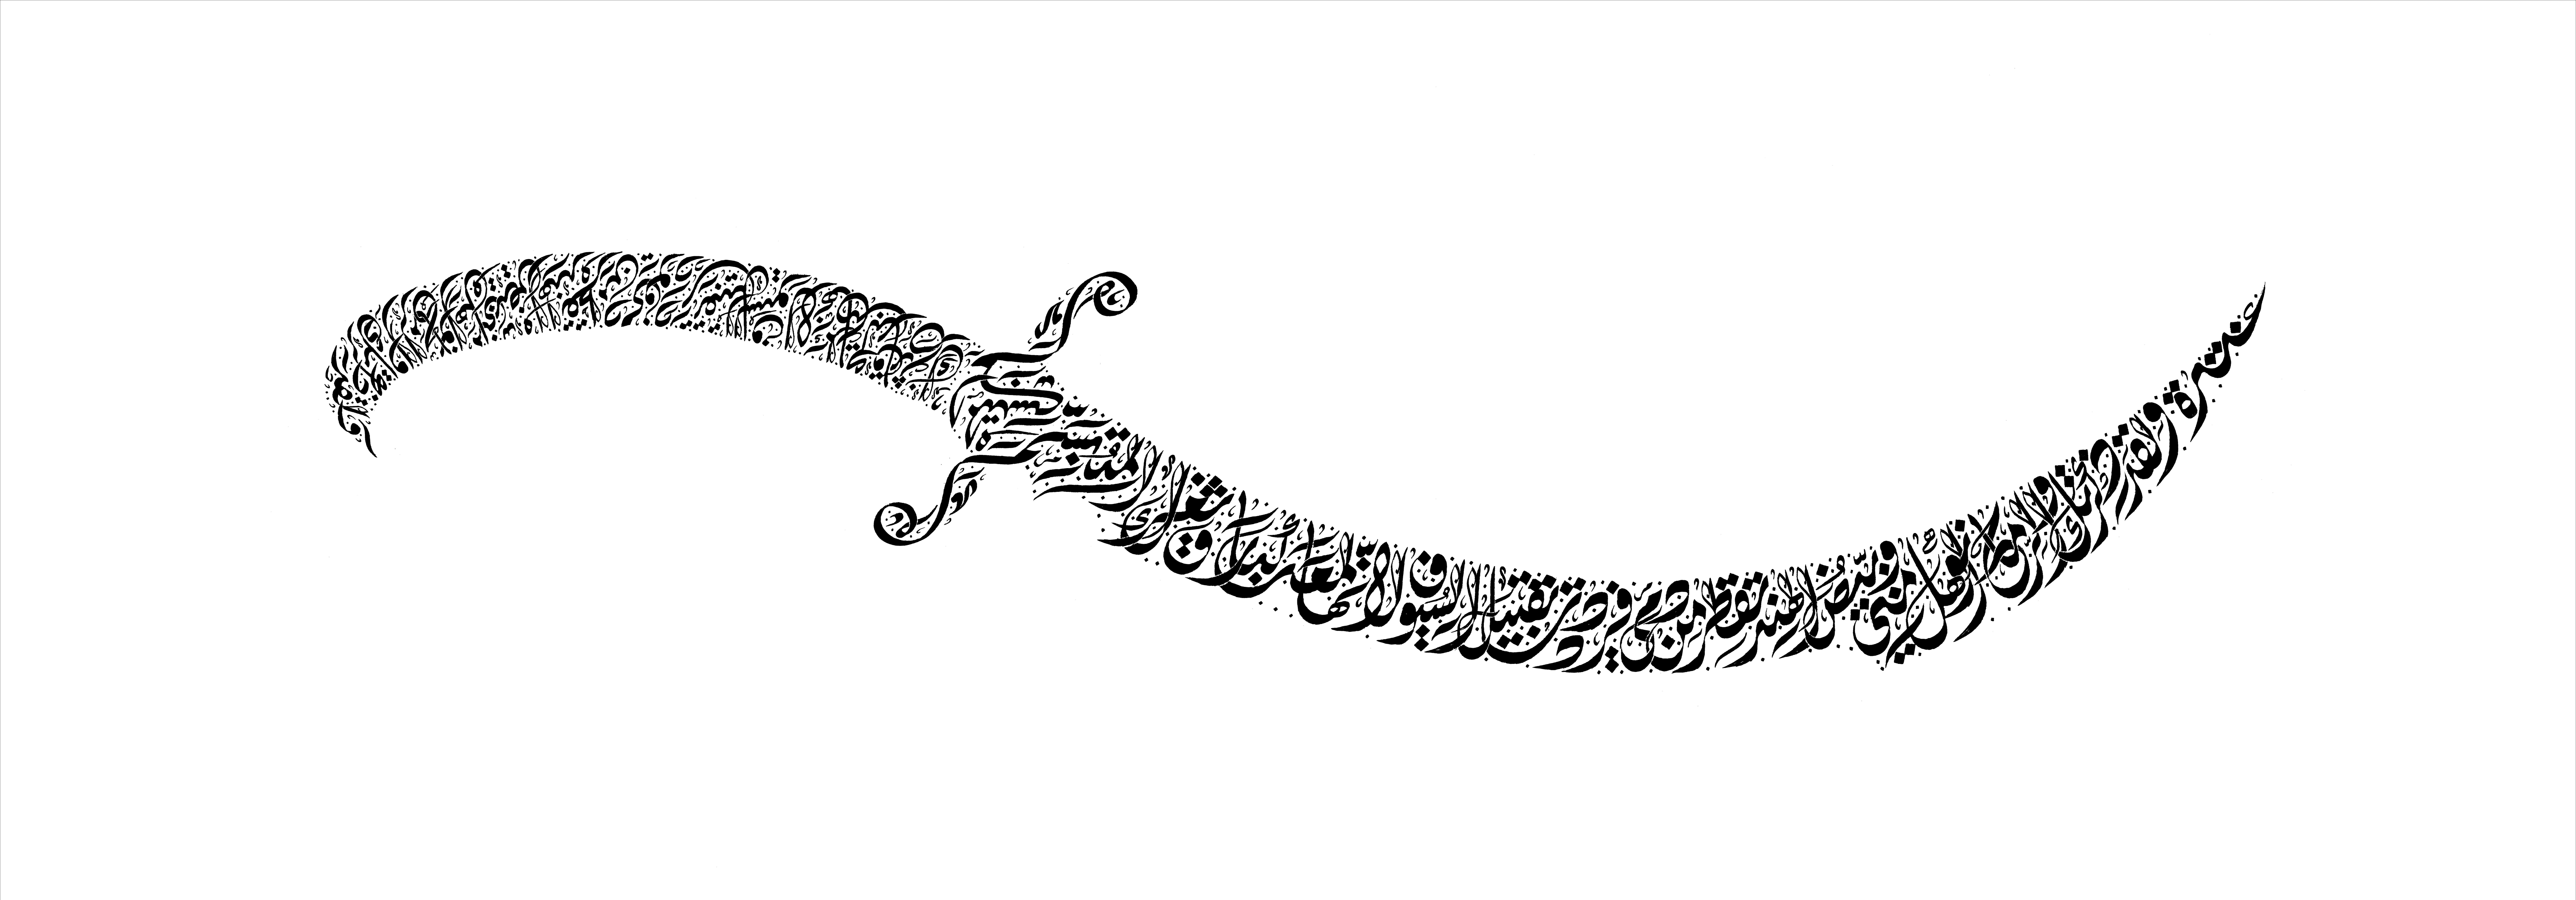 Sword low resAntara's Sword - Arabic Calligraphy by Everitte Barbee